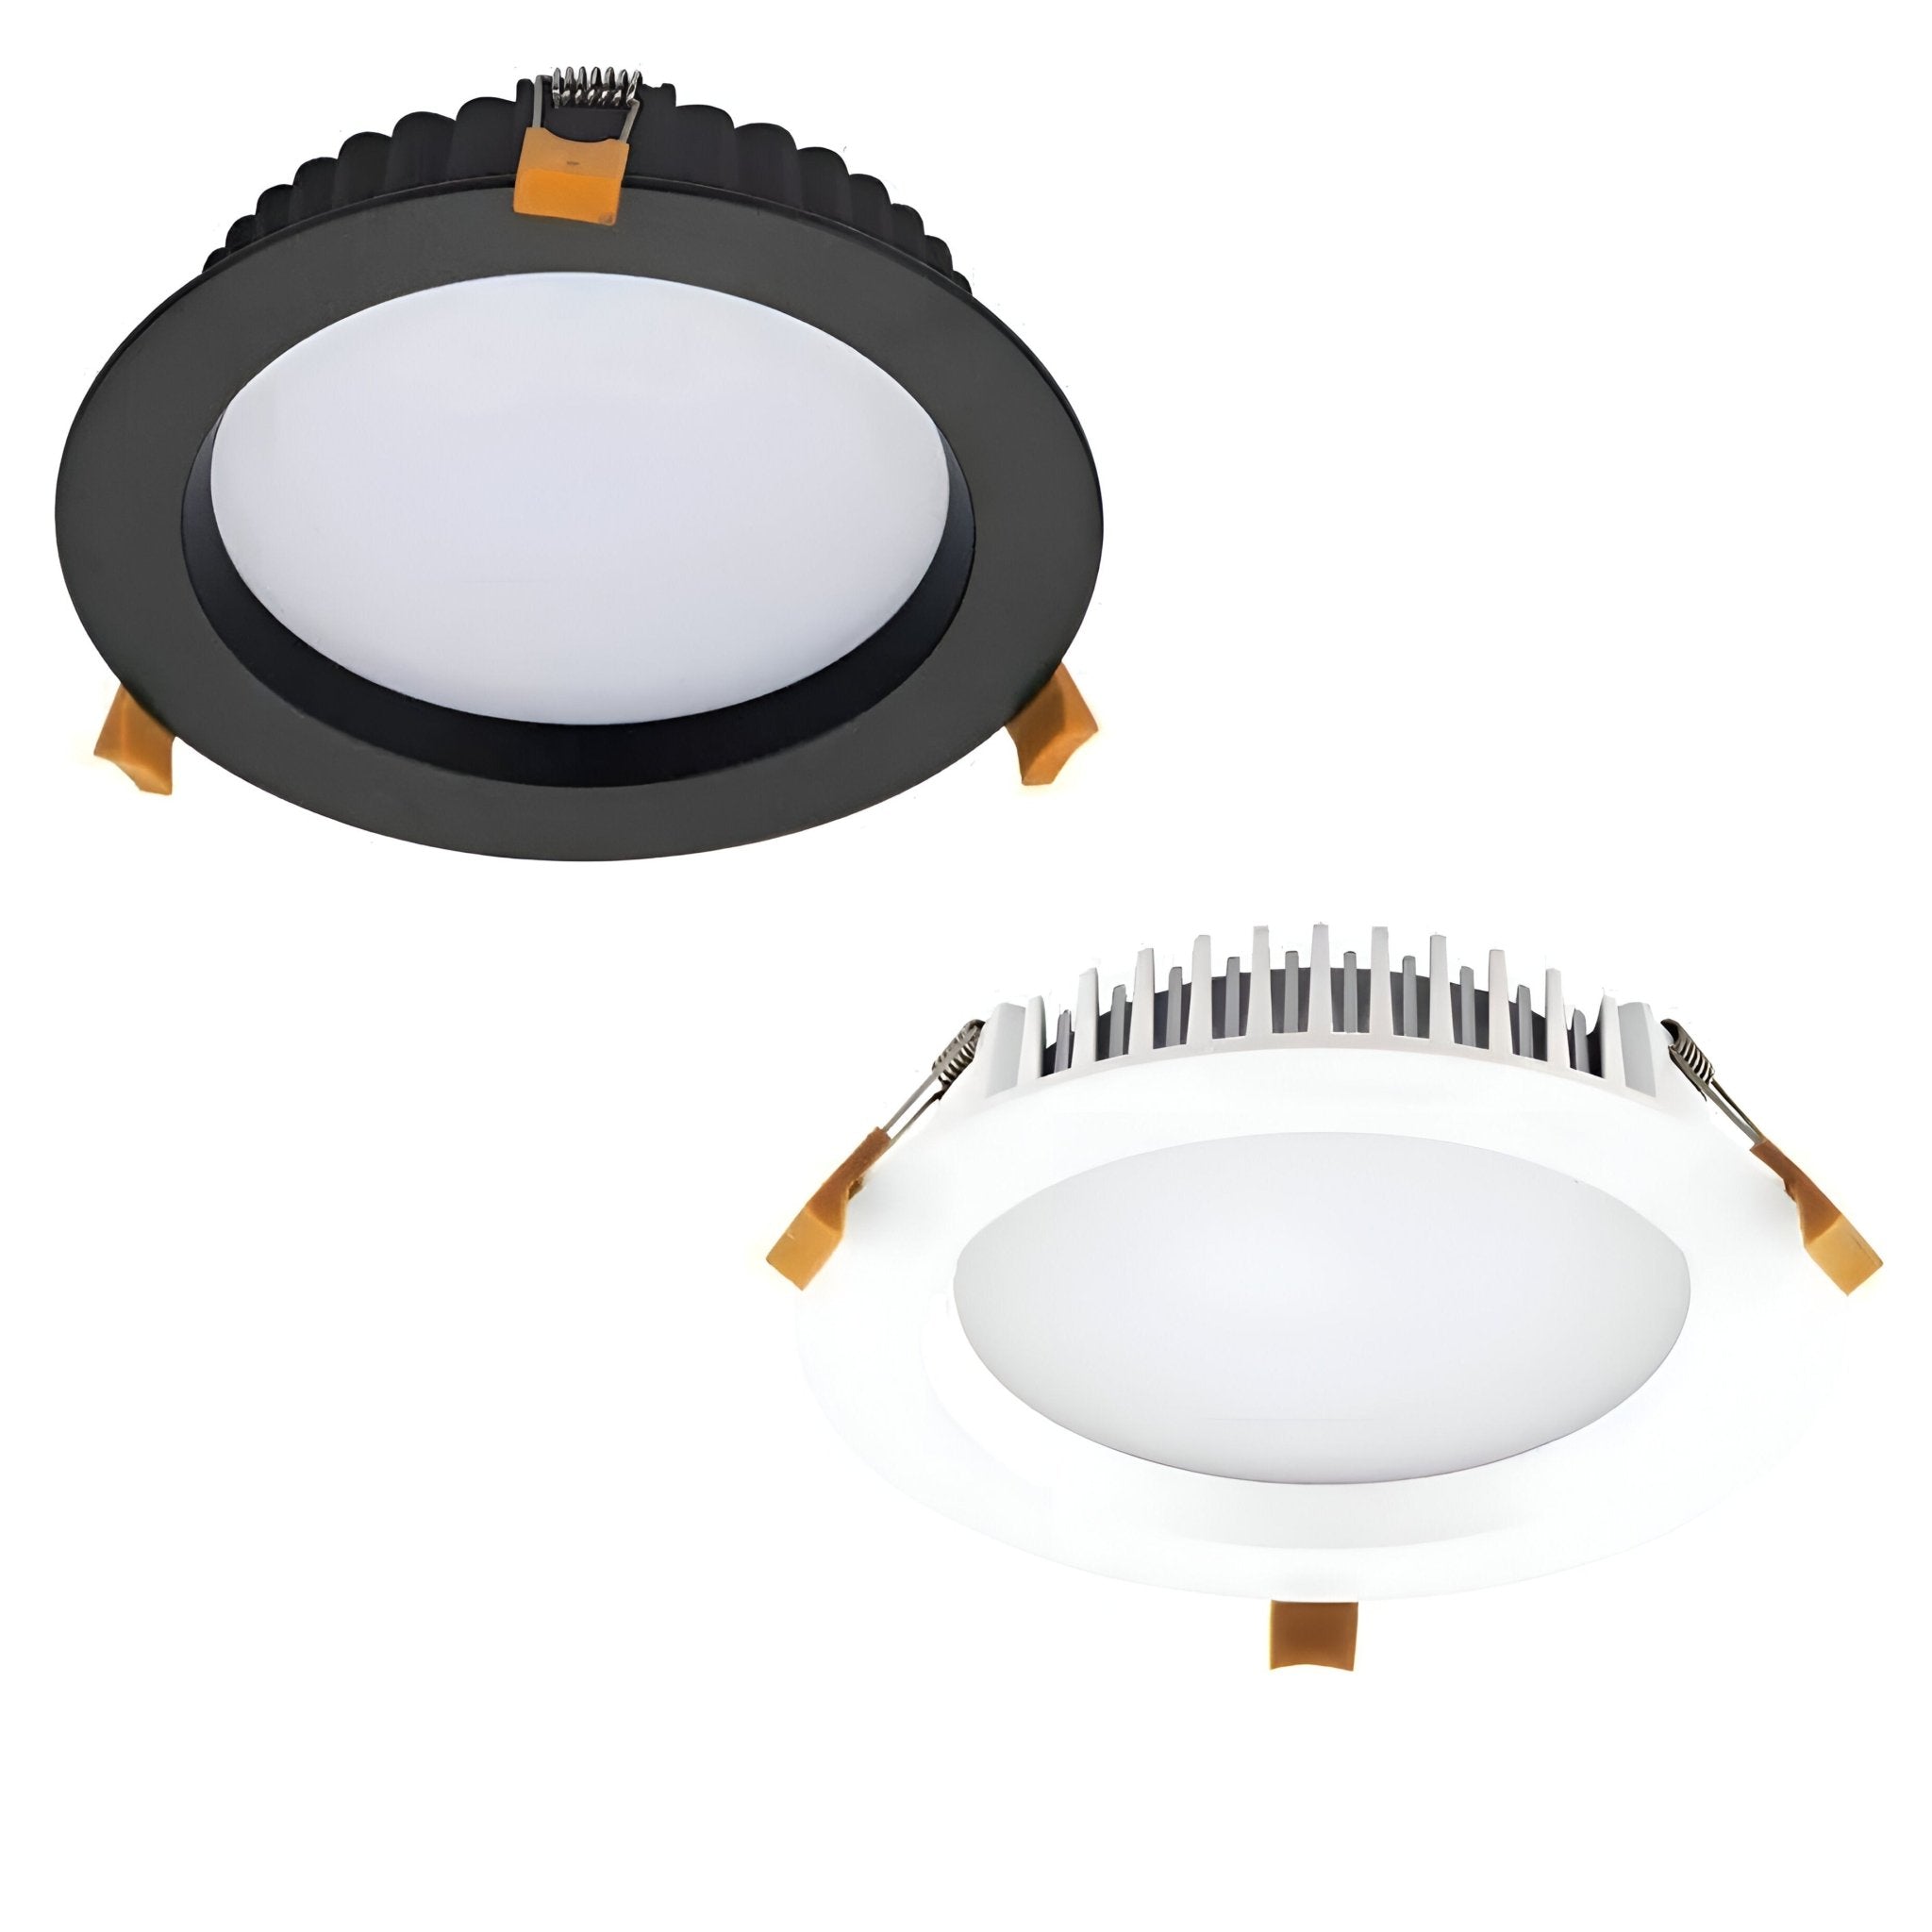 Domus DECO-20 TRIO/DALI Round 20W Dimmable LED Tricolour IP44 Downlight - Black/White - Mases LightingDomus